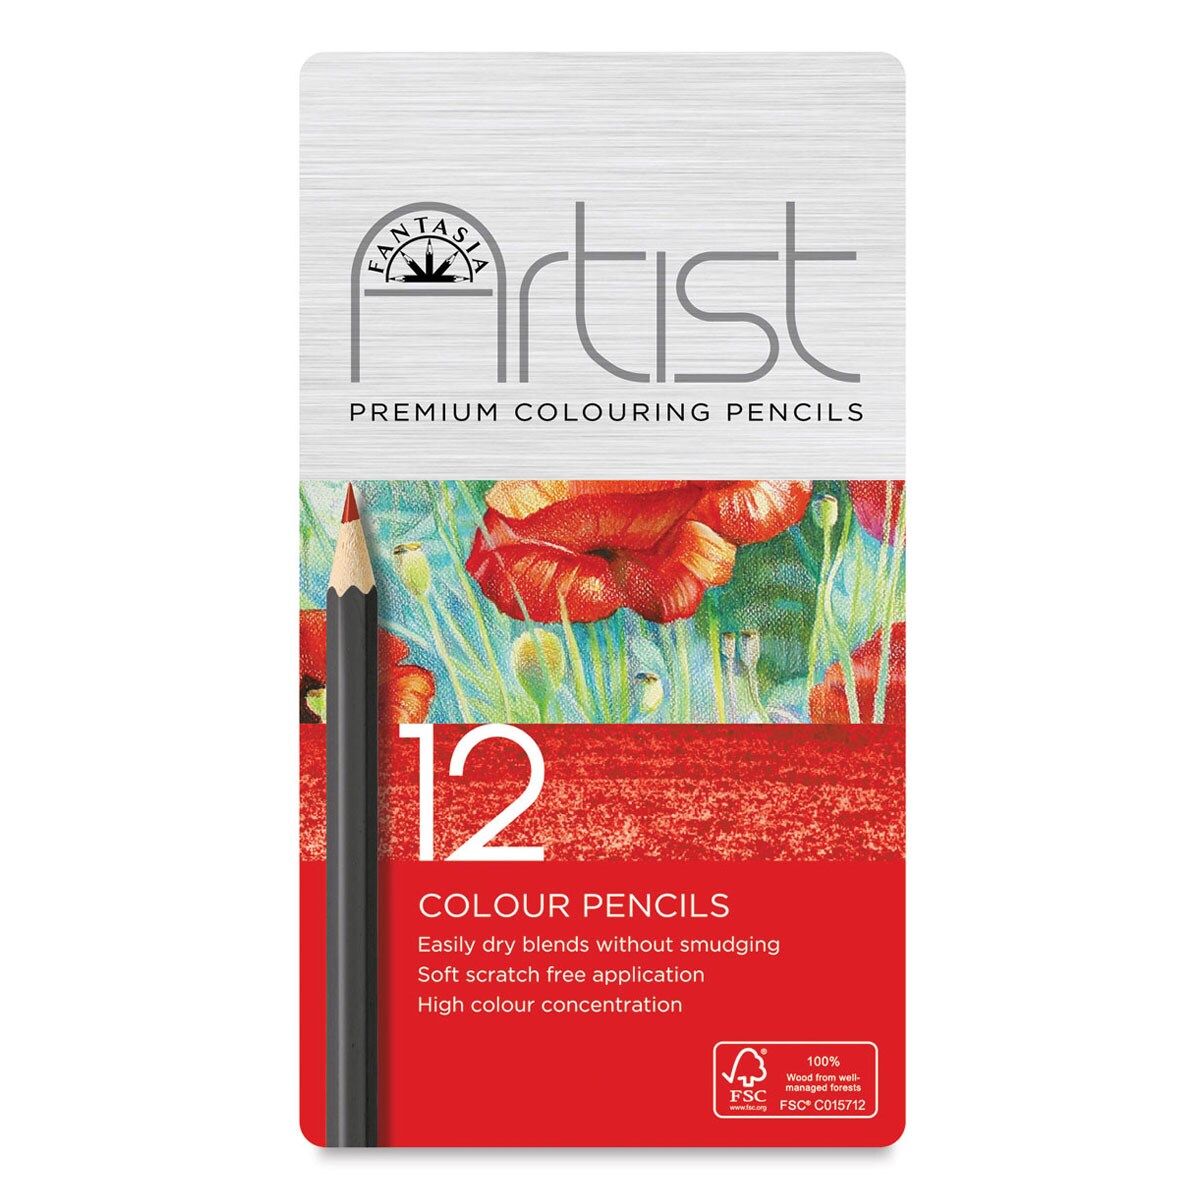 Fantasia Colored Pencil Set - Assorted Colors, Tin Box, Set of 24